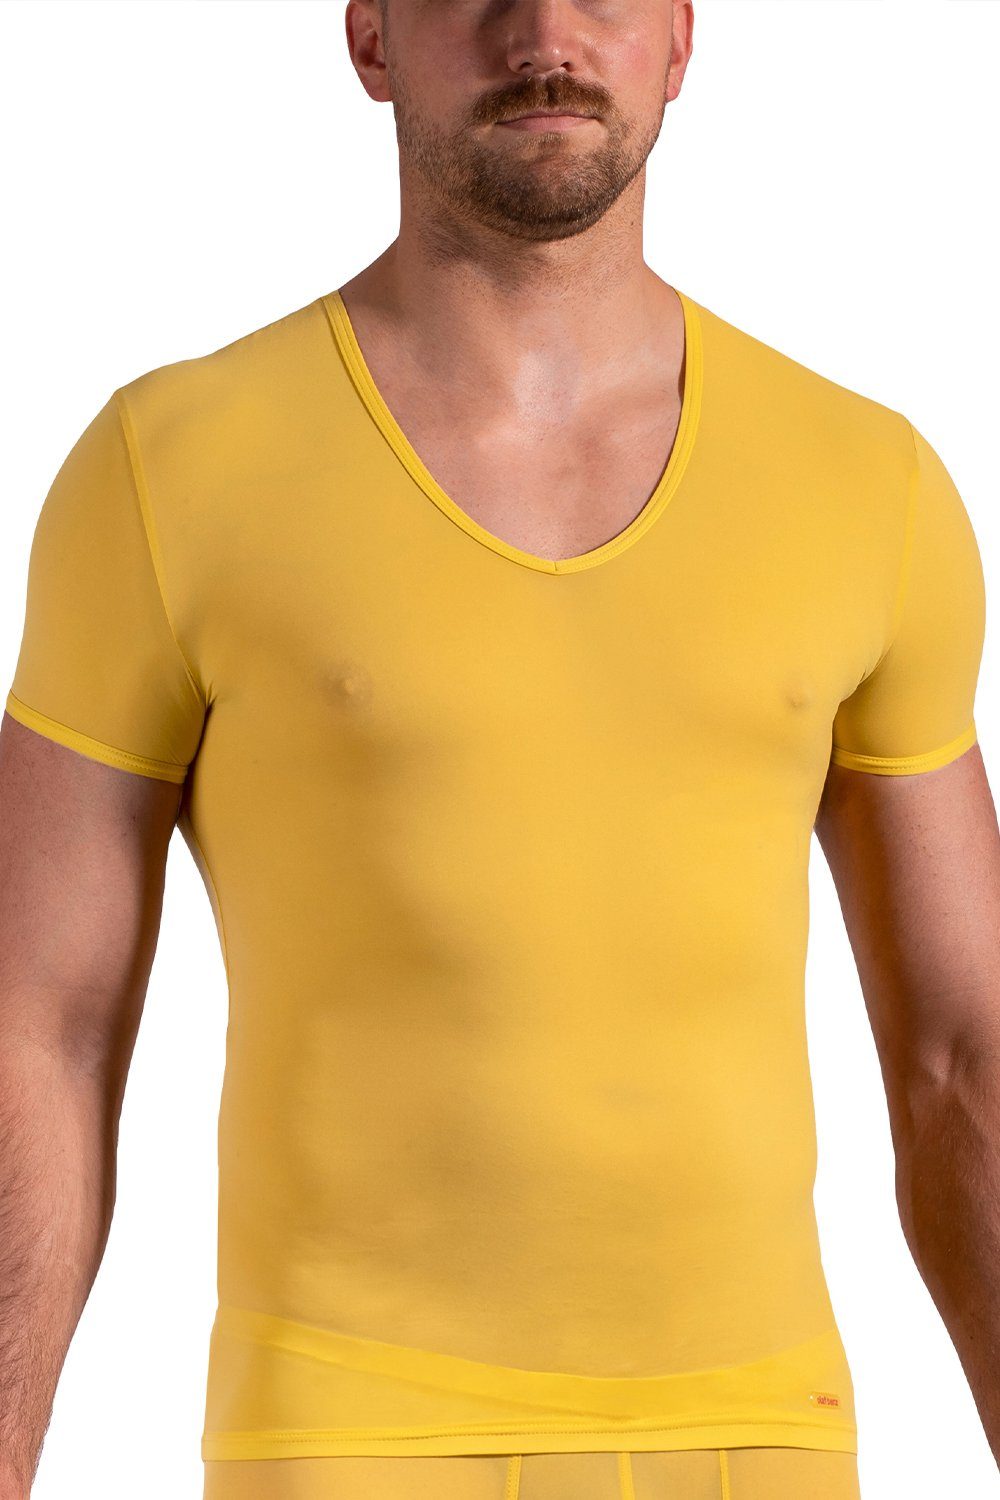 Olaf Benz Shirt mustard (Low) T-Shirt 106024 V-Neck